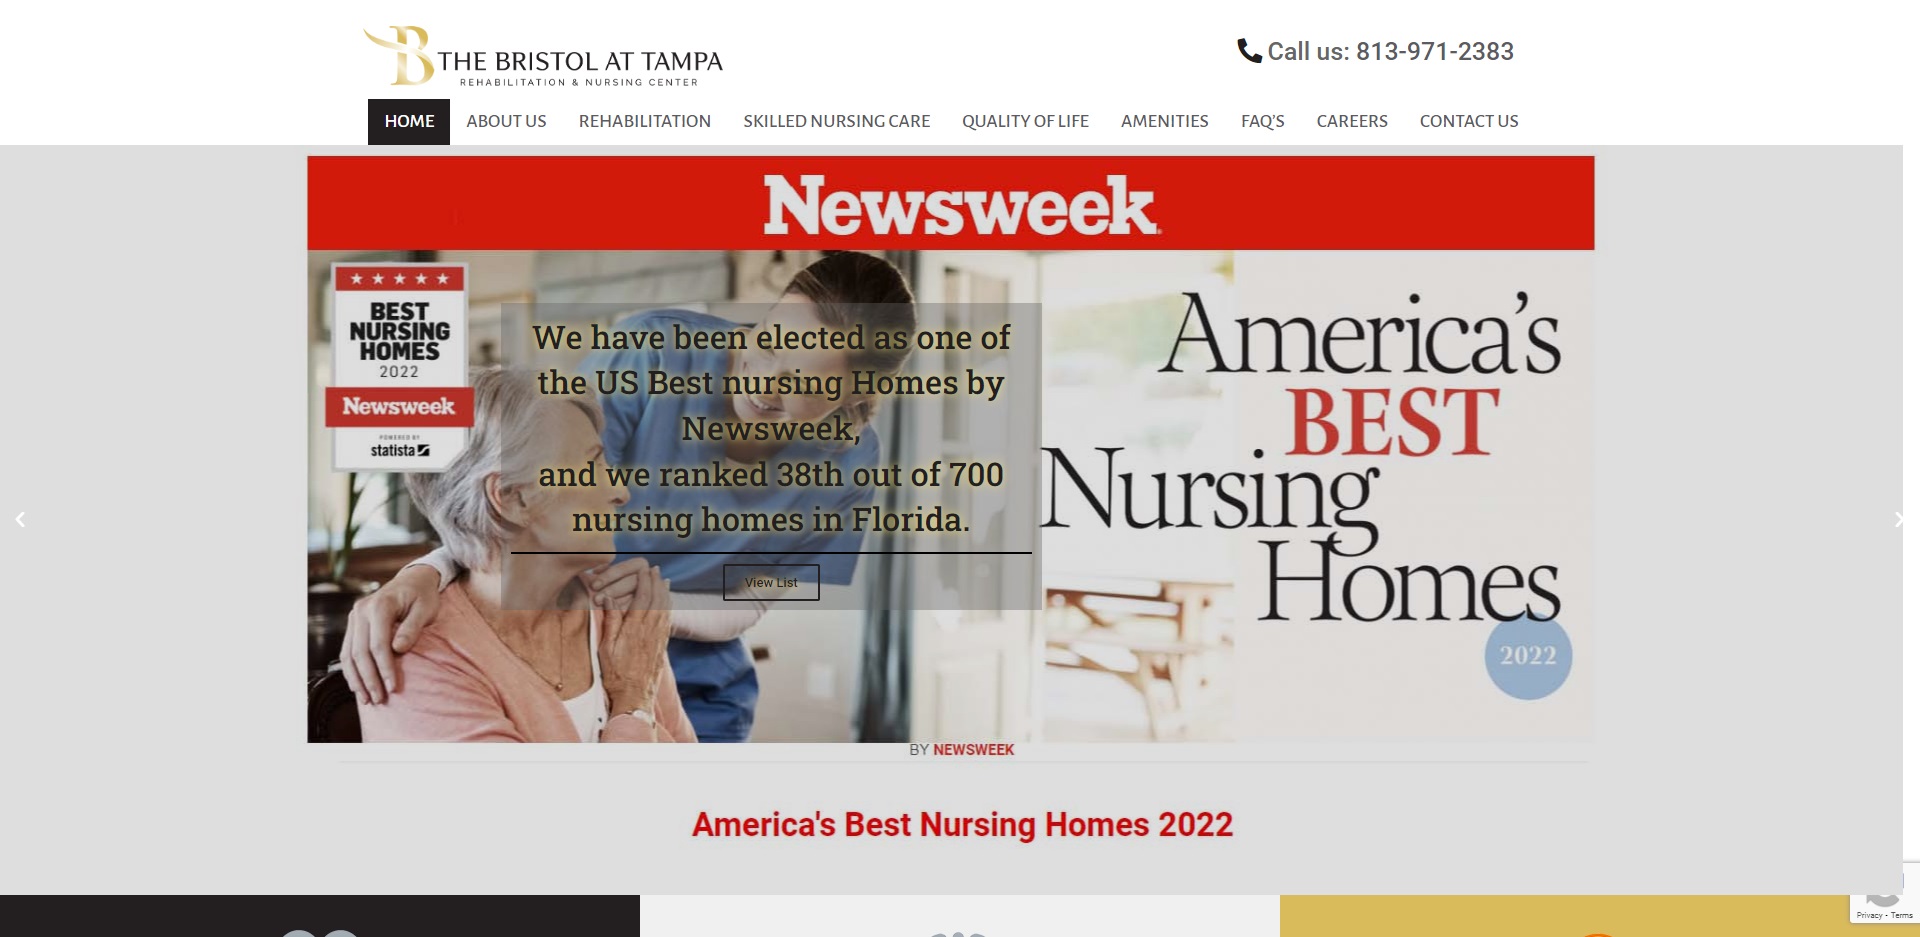 5 Best Nursing Homes in Tampa, FL